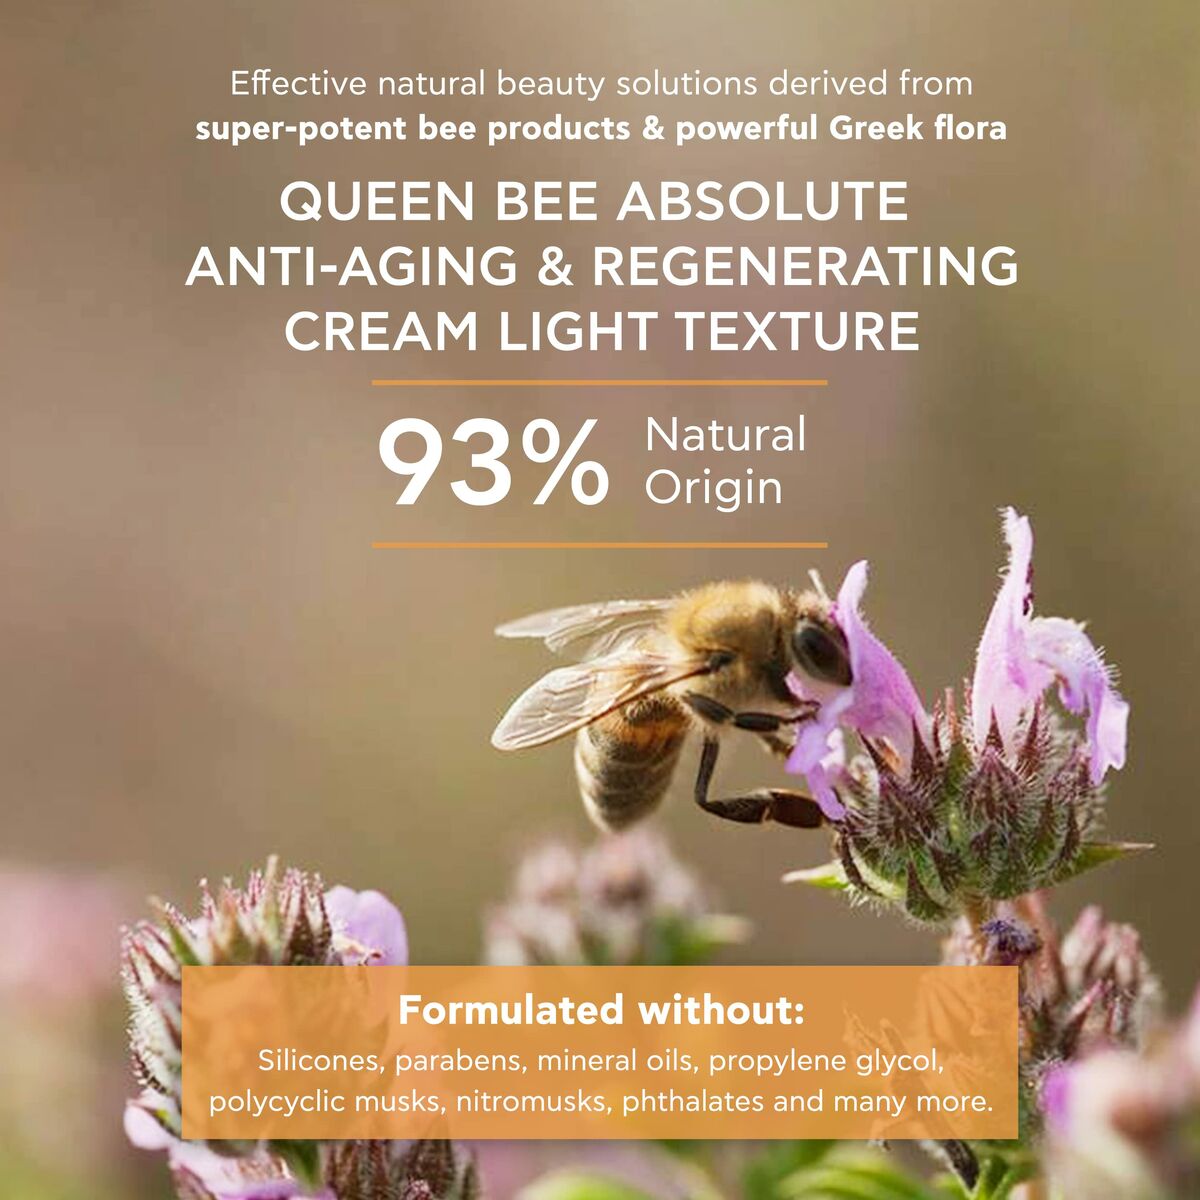 Facial Cream Apivita Queen Bee Anti-ageing 50 ml | Apivita | Aylal Beauty